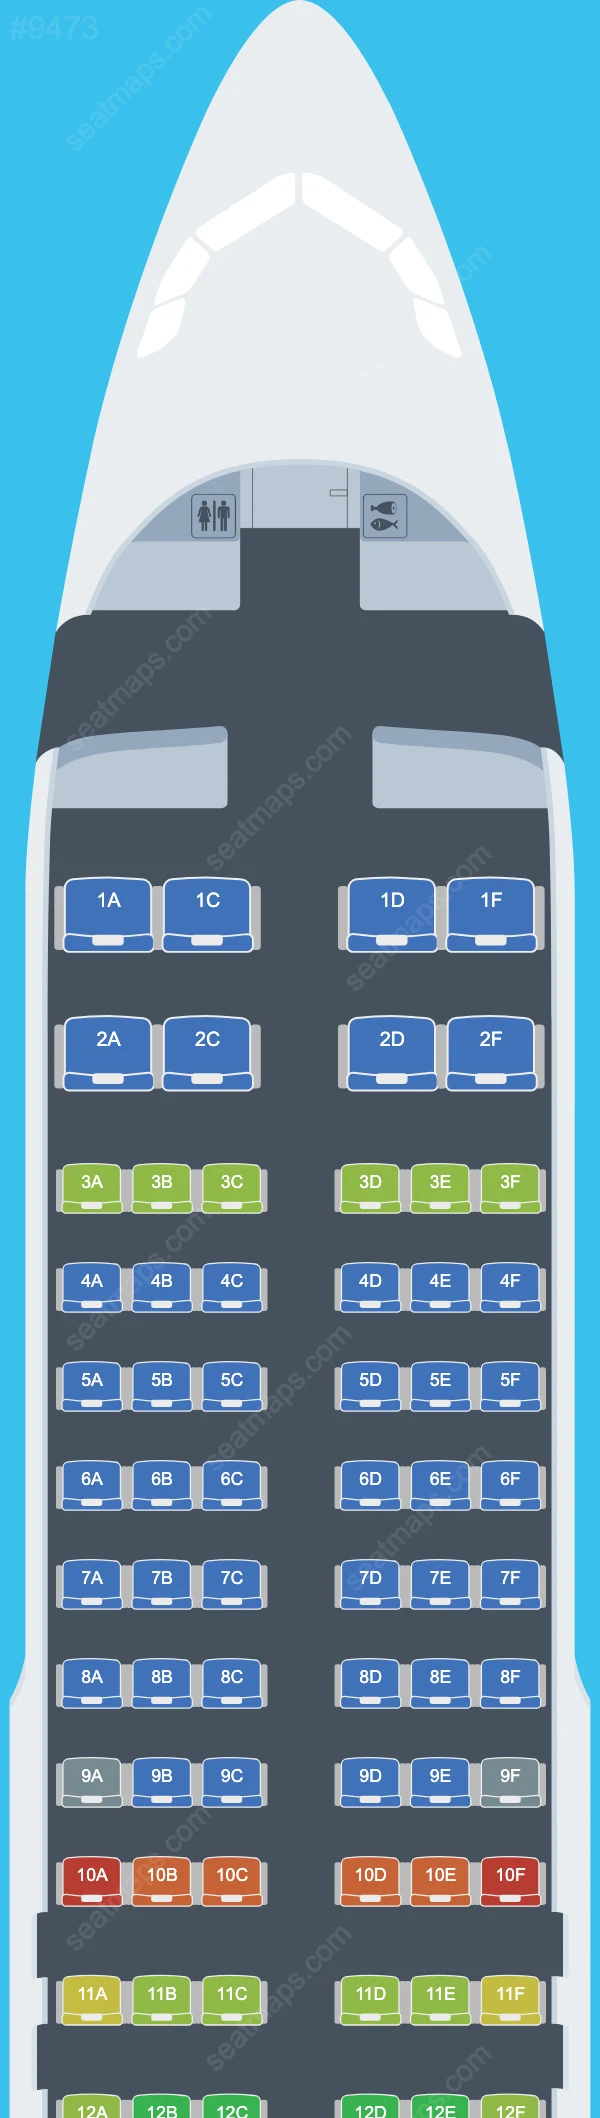 Схема салона Bamboo Airways в самолете Airbus A320 A320-200 V.1